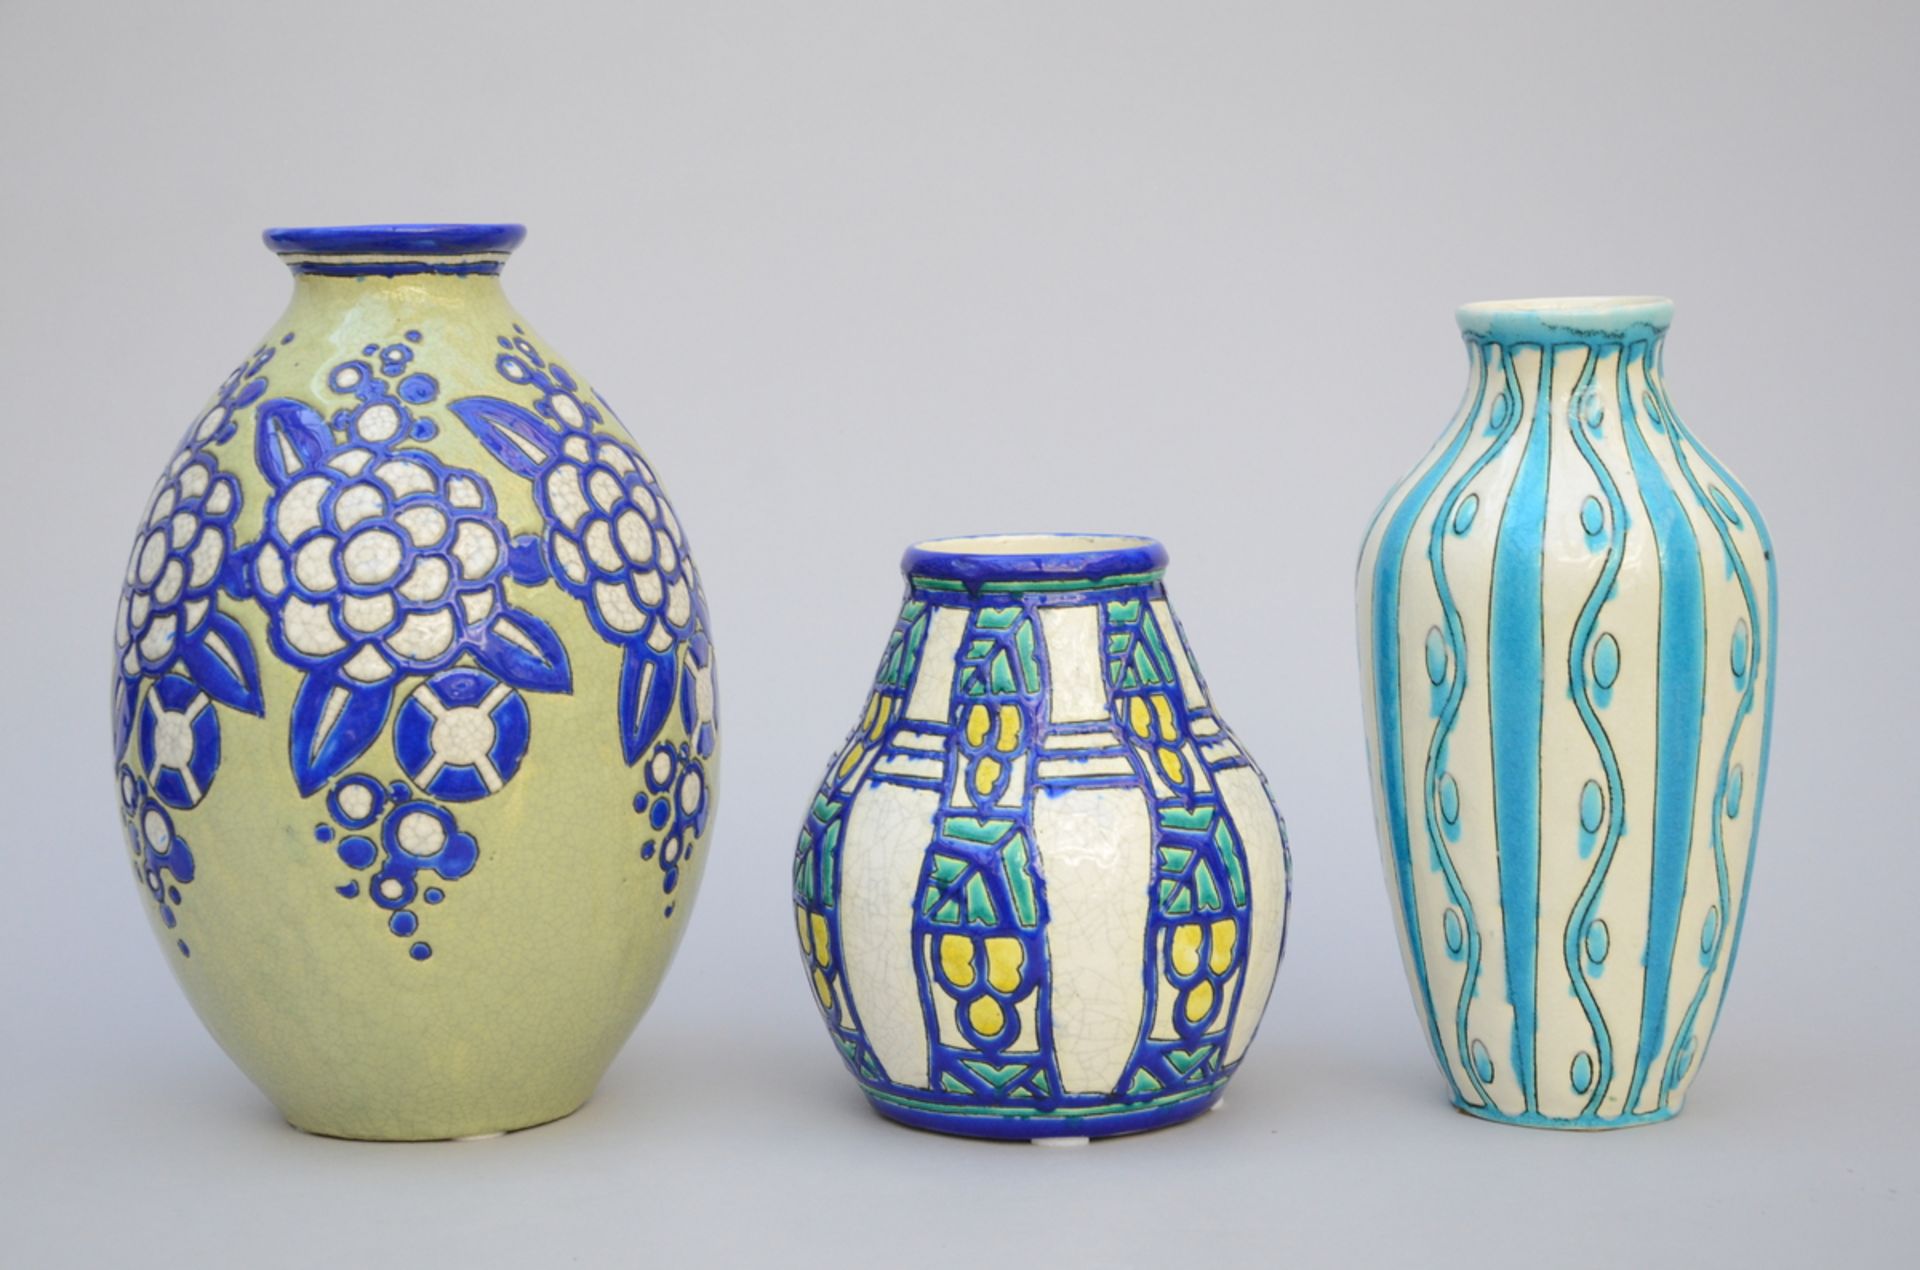 3 Art Deco vases, Boch, Charles Catteau, D952 D1121 D734 (h20 to 31cm) - Image 2 of 3